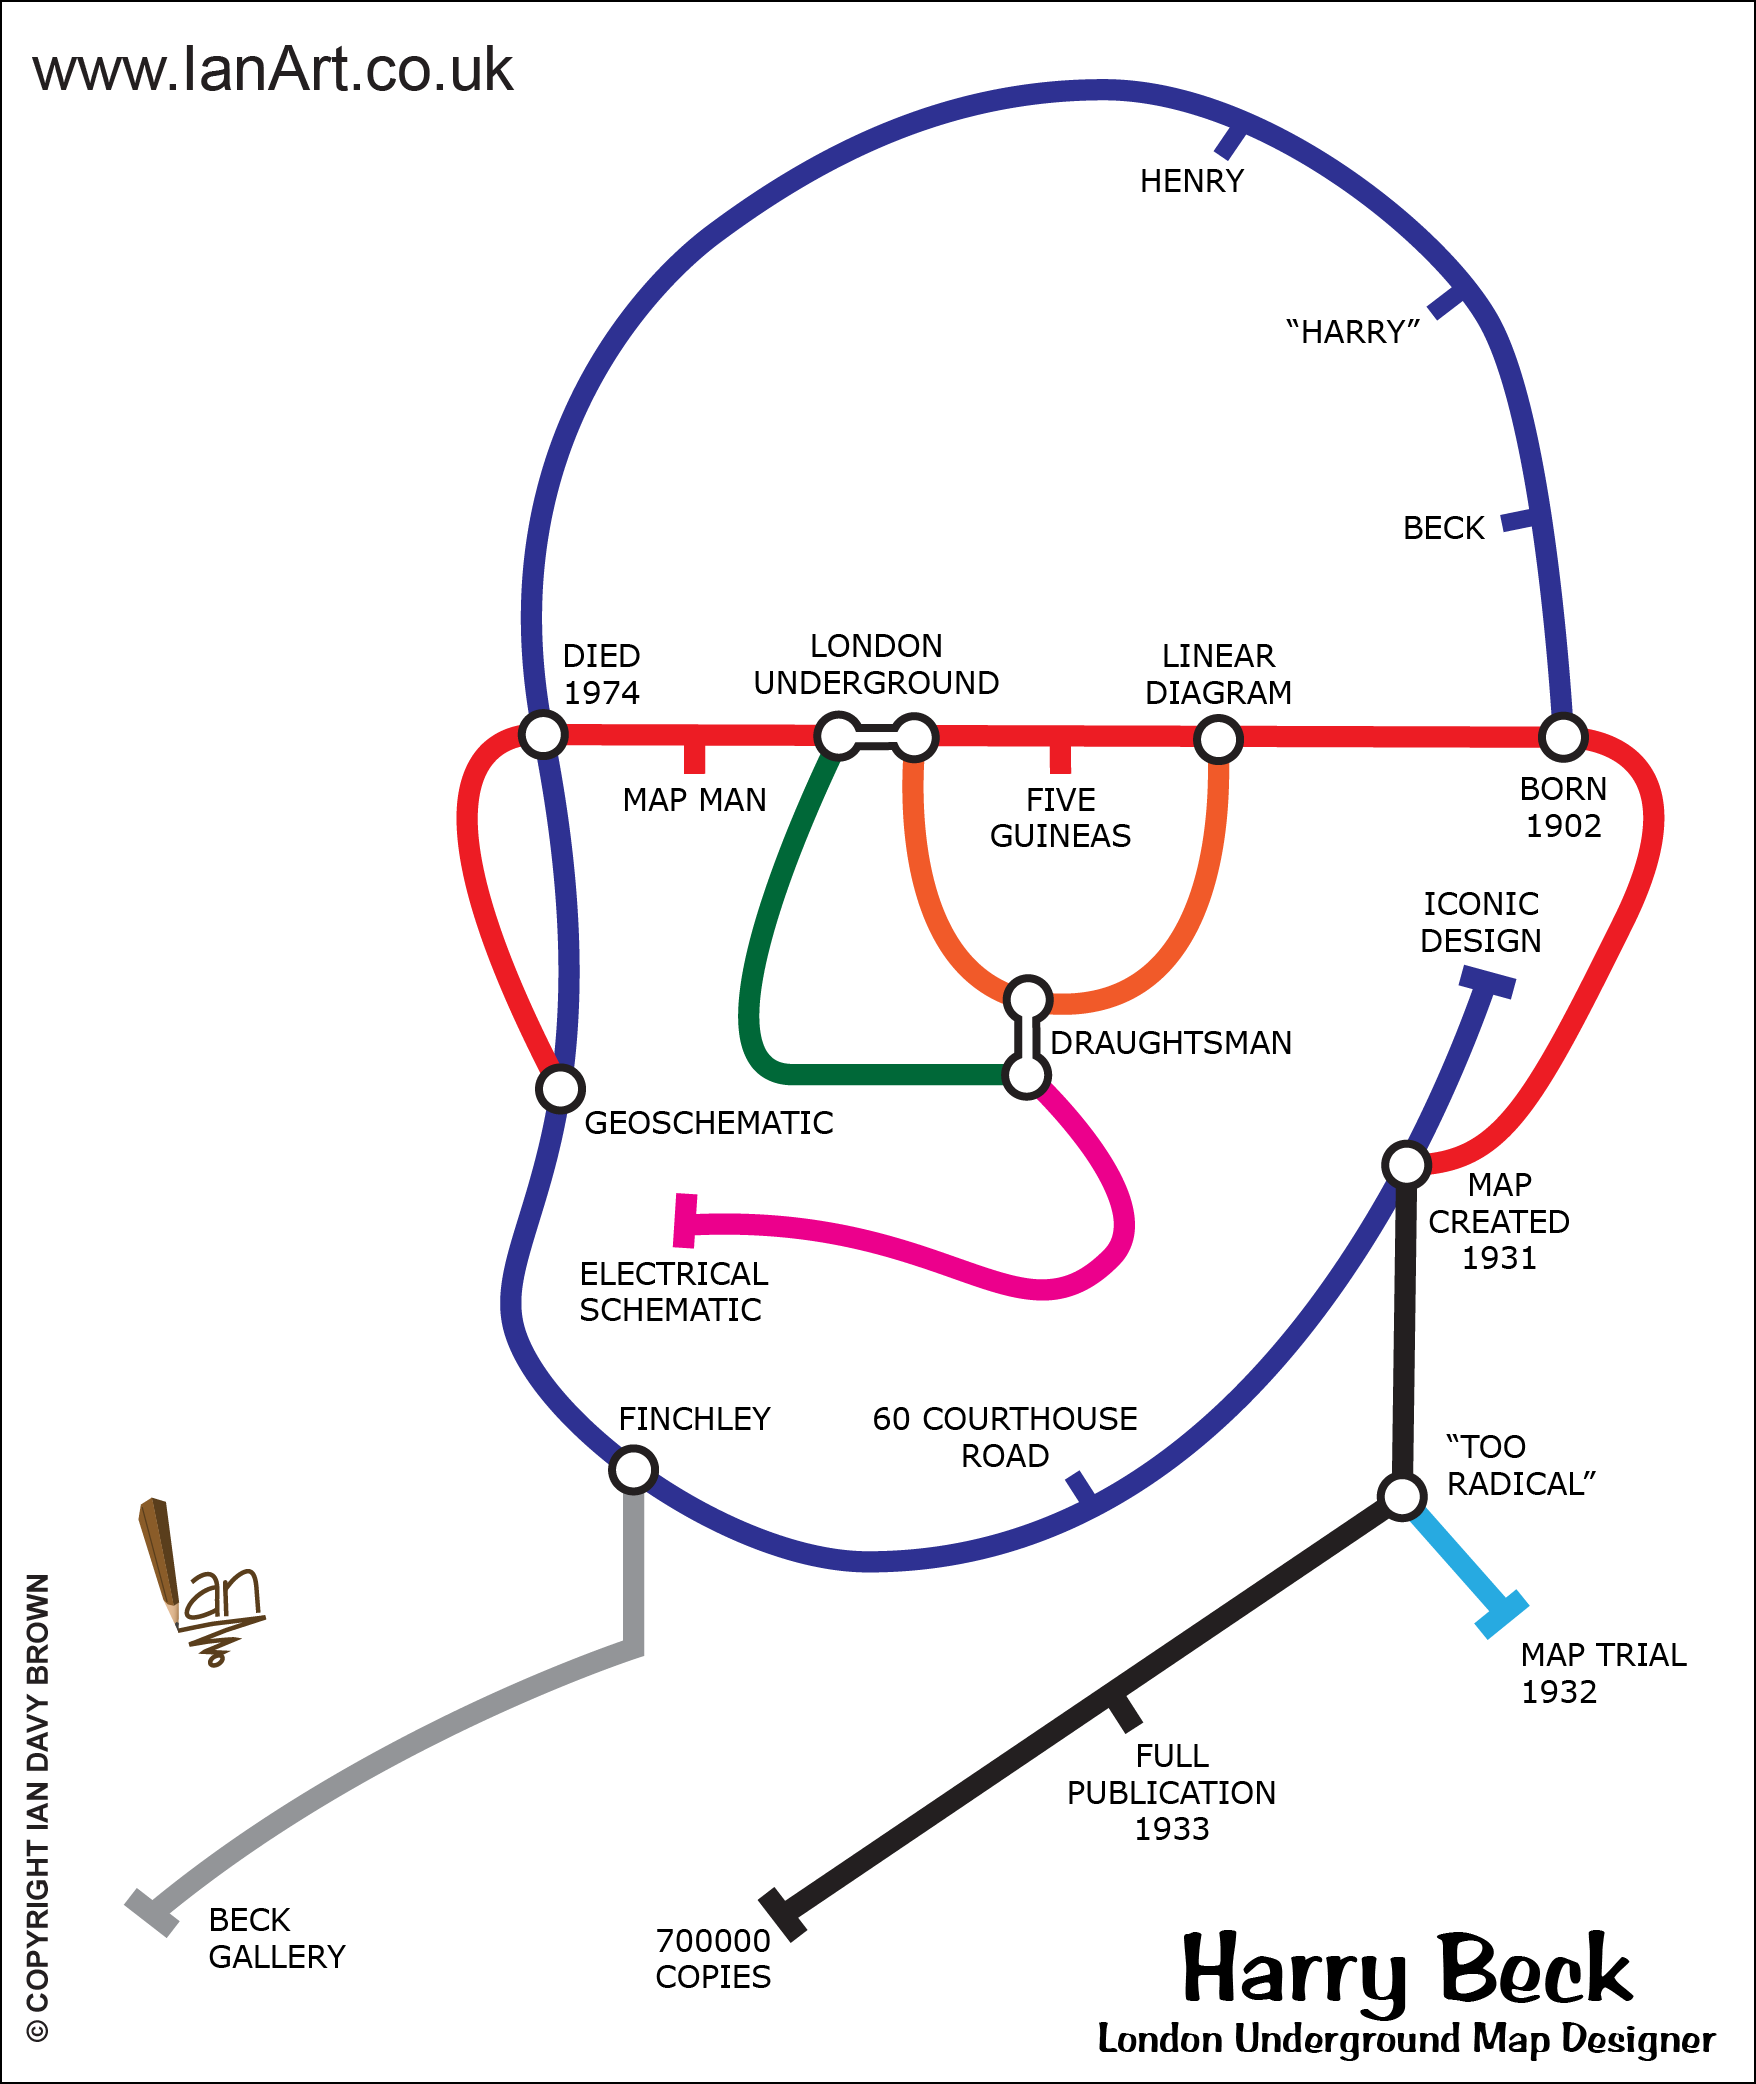 Harry-Beck-London-Underground-Map-Designer-Caricature-Symbolic-cartoon-created-Ian-Davy-Brown-IanArt-IDB